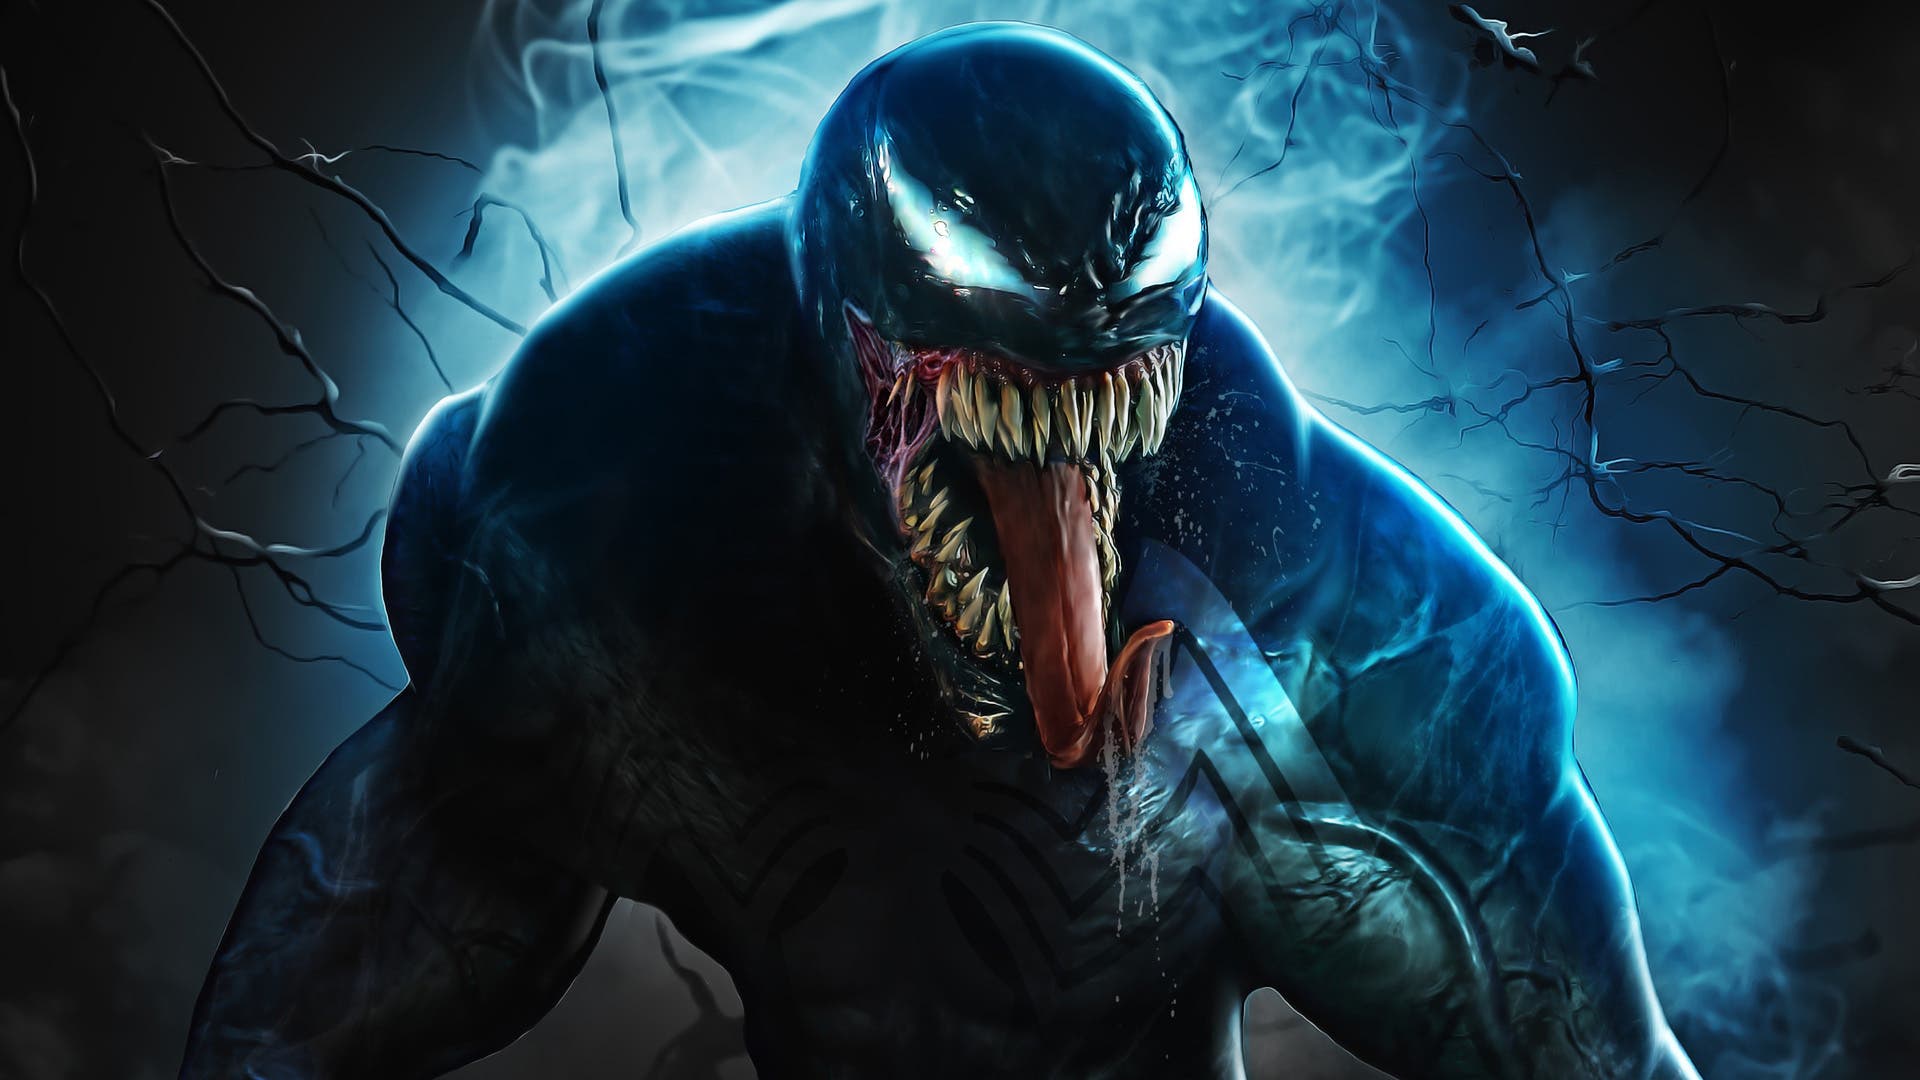 Venom for ios download